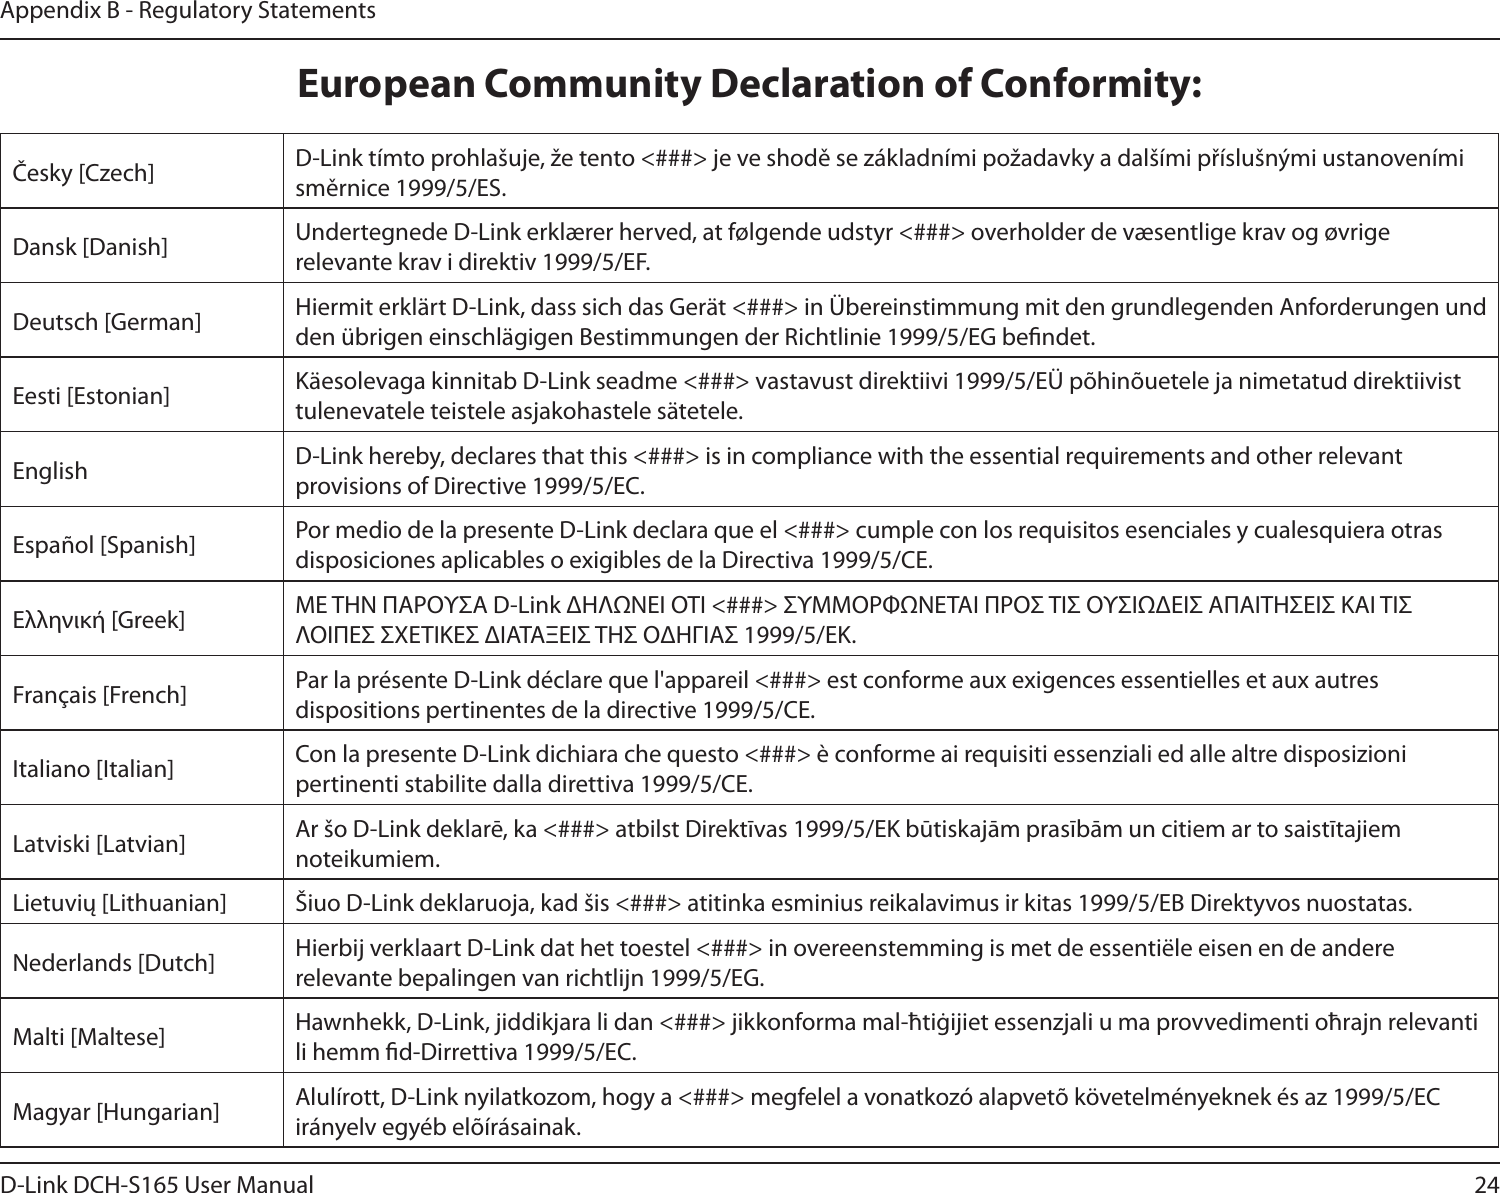 24D-Link DCH-S165 User ManualAppendix B - Regulatory StatementsEuropean Community Declaration of Conformity:Česky [Czech] D-Link tímto prohlašuje, že tento &lt;###&gt; je ve shodě se základními požadavky a dalšími příslušnými ustanoveními směrnice 1999/5/ES.Dansk [Danish] Undertegnede D-Link erklærer herved, at følgende udstyr &lt;###&gt; overholder de væsentlige krav og øvrige relevante krav i direktiv 1999/5/EF.Deutsch [German] Hiermit erklärt D-Link, dass sich das Gerät &lt;###&gt; in Übereinstimmung mit den grundlegenden Anforderungen und den übrigen einschlägigen Bestimmungen der Richtlinie 1999/5/EG bendet.Eesti [Estonian] Käesolevaga kinnitab D-Link seadme &lt;###&gt; vastavust direktiivi 1999/5/EÜ põhinõuetele ja nimetatud direktiivist tulenevatele teistele asjakohastele sätetele.English D-Link hereby, declares that this &lt;###&gt; is in compliance with the essential requirements and other relevant provisions of Directive 1999/5/EC.Español [Spanish] Por medio de la presente D-Link declara que el &lt;###&gt; cumple con los requisitos esenciales y cualesquiera otras disposiciones aplicables o exigibles de la Directiva 1999/5/CE.Ελληνική [Greek] ΜΕ ΤΗΝ ΠΑΡΟΥΣΑ D-Link ΔΗΛΩΝΕΙ ΟΤΙ &lt;###&gt; ΣΥΜΜΟΡΦΩΝΕΤΑΙ ΠΡΟΣ ΤΙΣ ΟΥΣΙΩΔΕΙΣ ΑΠΑΙΤΗΣΕΙΣ ΚΑΙ ΤΙΣ ΛΟΙΠΕΣ ΣΧΕΤΙΚΕΣ ΔΙΑΤΑΞΕΙΣ ΤΗΣ ΟΔΗΓΙΑΣ 1999/5/ΕΚ.Français [French] Par la présente D-Link déclare que l&apos;appareil &lt;###&gt; est conforme aux exigences essentielles et aux autres dispositions pertinentes de la directive 1999/5/CE.Italiano [Italian] Con la presente D-Link dichiara che questo &lt;###&gt; è conforme ai requisiti essenziali ed alle altre disposizioni pertinenti stabilite dalla direttiva 1999/5/CE.Latviski [Latvian] Ar šo D-Link deklarē, ka &lt;###&gt; atbilst Direktīvas 1999/5/EK būtiskajām prasībām un citiem ar to saistītajiem noteikumiem.Lietuvių [Lithuanian]  Šiuo D-Link deklaruoja, kad šis &lt;###&gt; atitinka esminius reikalavimus ir kitas 1999/5/EB Direktyvos nuostatas.Nederlands [Dutch] Hierbij verklaart D-Link dat het toestel &lt;###&gt; in overeenstemming is met de essentiële eisen en de andere relevante bepalingen van richtlijn 1999/5/EG.Malti [Maltese] Hawnhekk, D-Link, jiddikjara li dan &lt;###&gt; jikkonforma mal-ħtiġijiet essenzjali u ma provvedimenti oħrajn relevanti li hemm d-Dirrettiva 1999/5/EC.Magyar [Hungarian] Alulírott, D-Link nyilatkozom, hogy a &lt;###&gt; megfelel a vonatkozó alapvetõ követelményeknek és az 1999/5/EC irányelv egyéb elõírásainak.